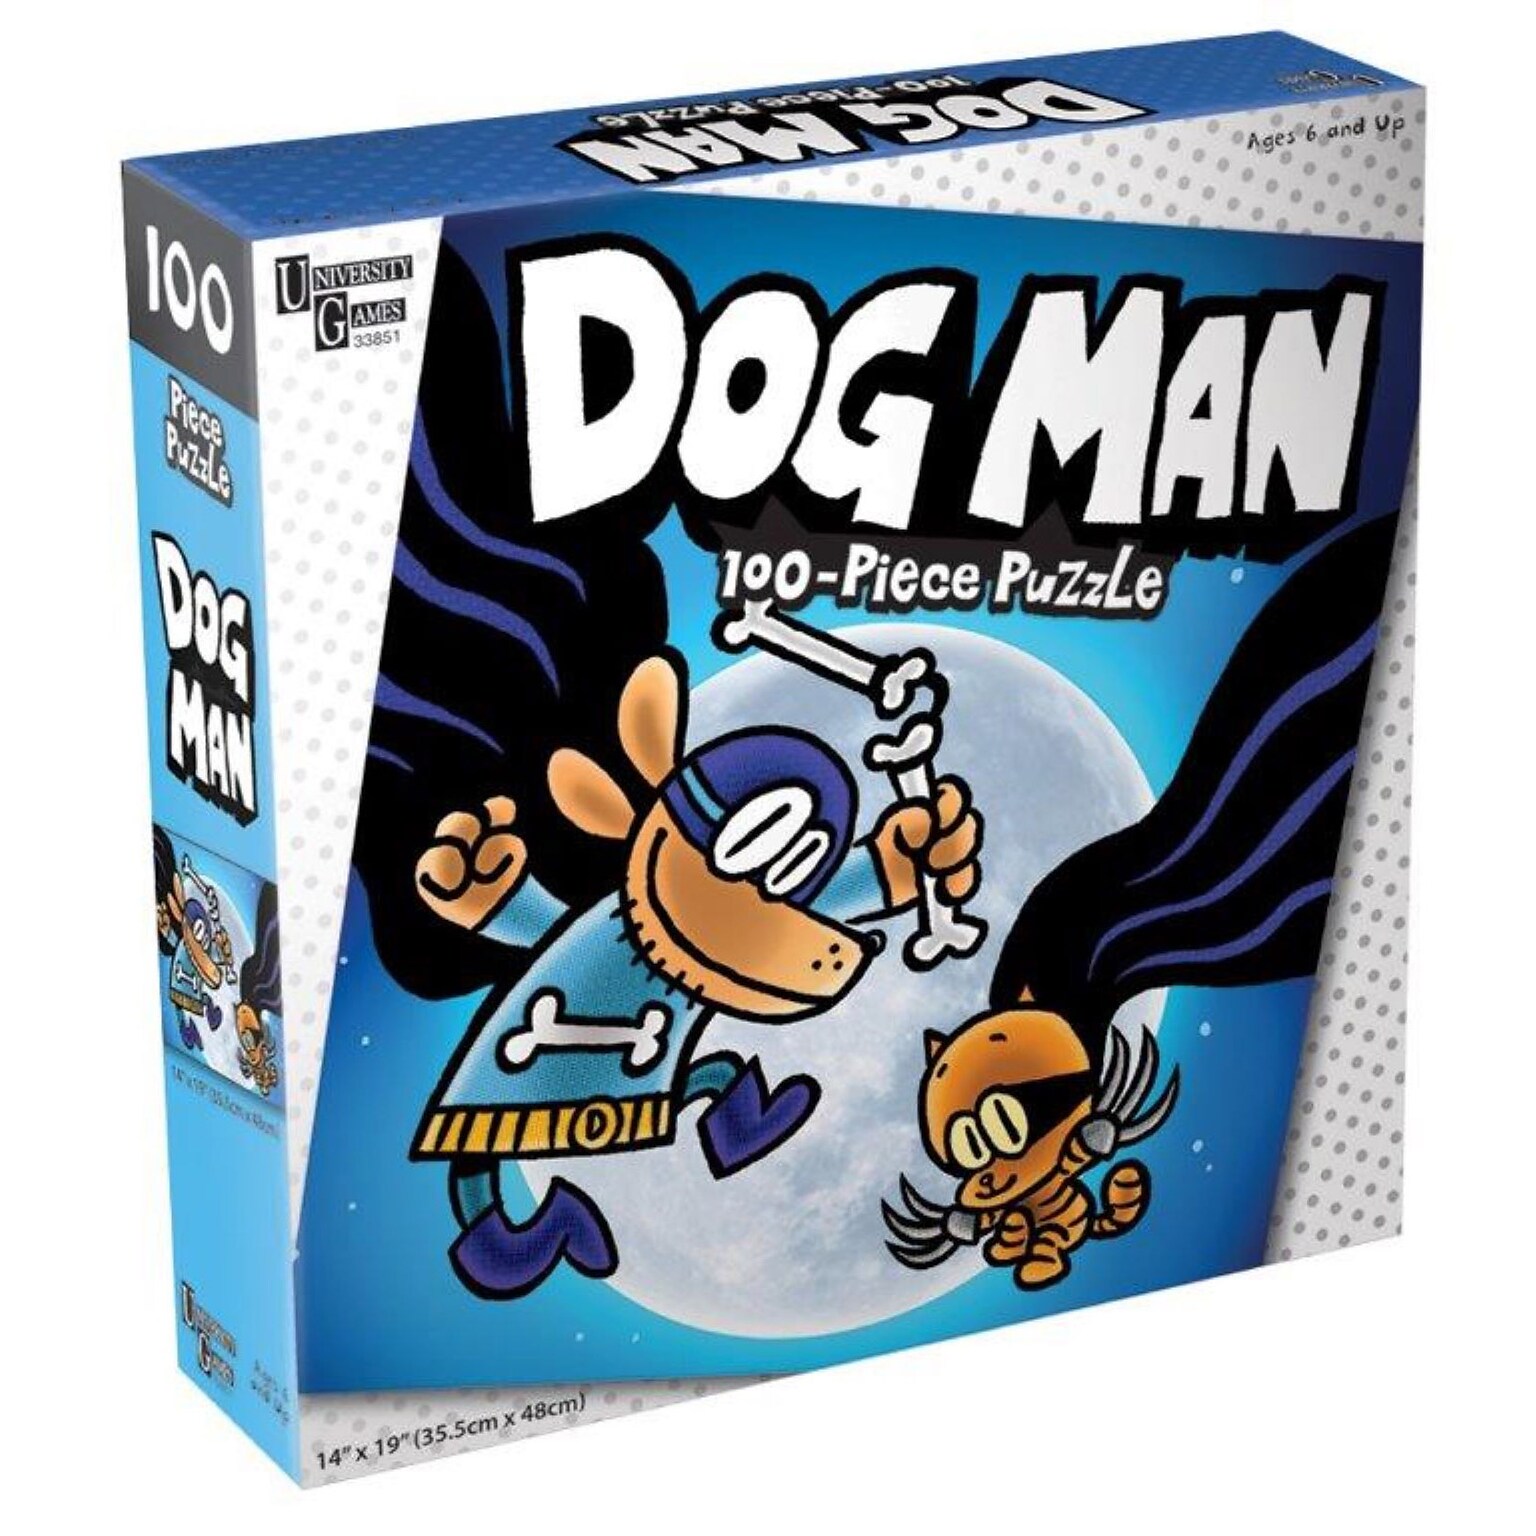 University Games Dog Man and Cat Kid Puzzle, 100-Piece Jigsaw (UG-33851)